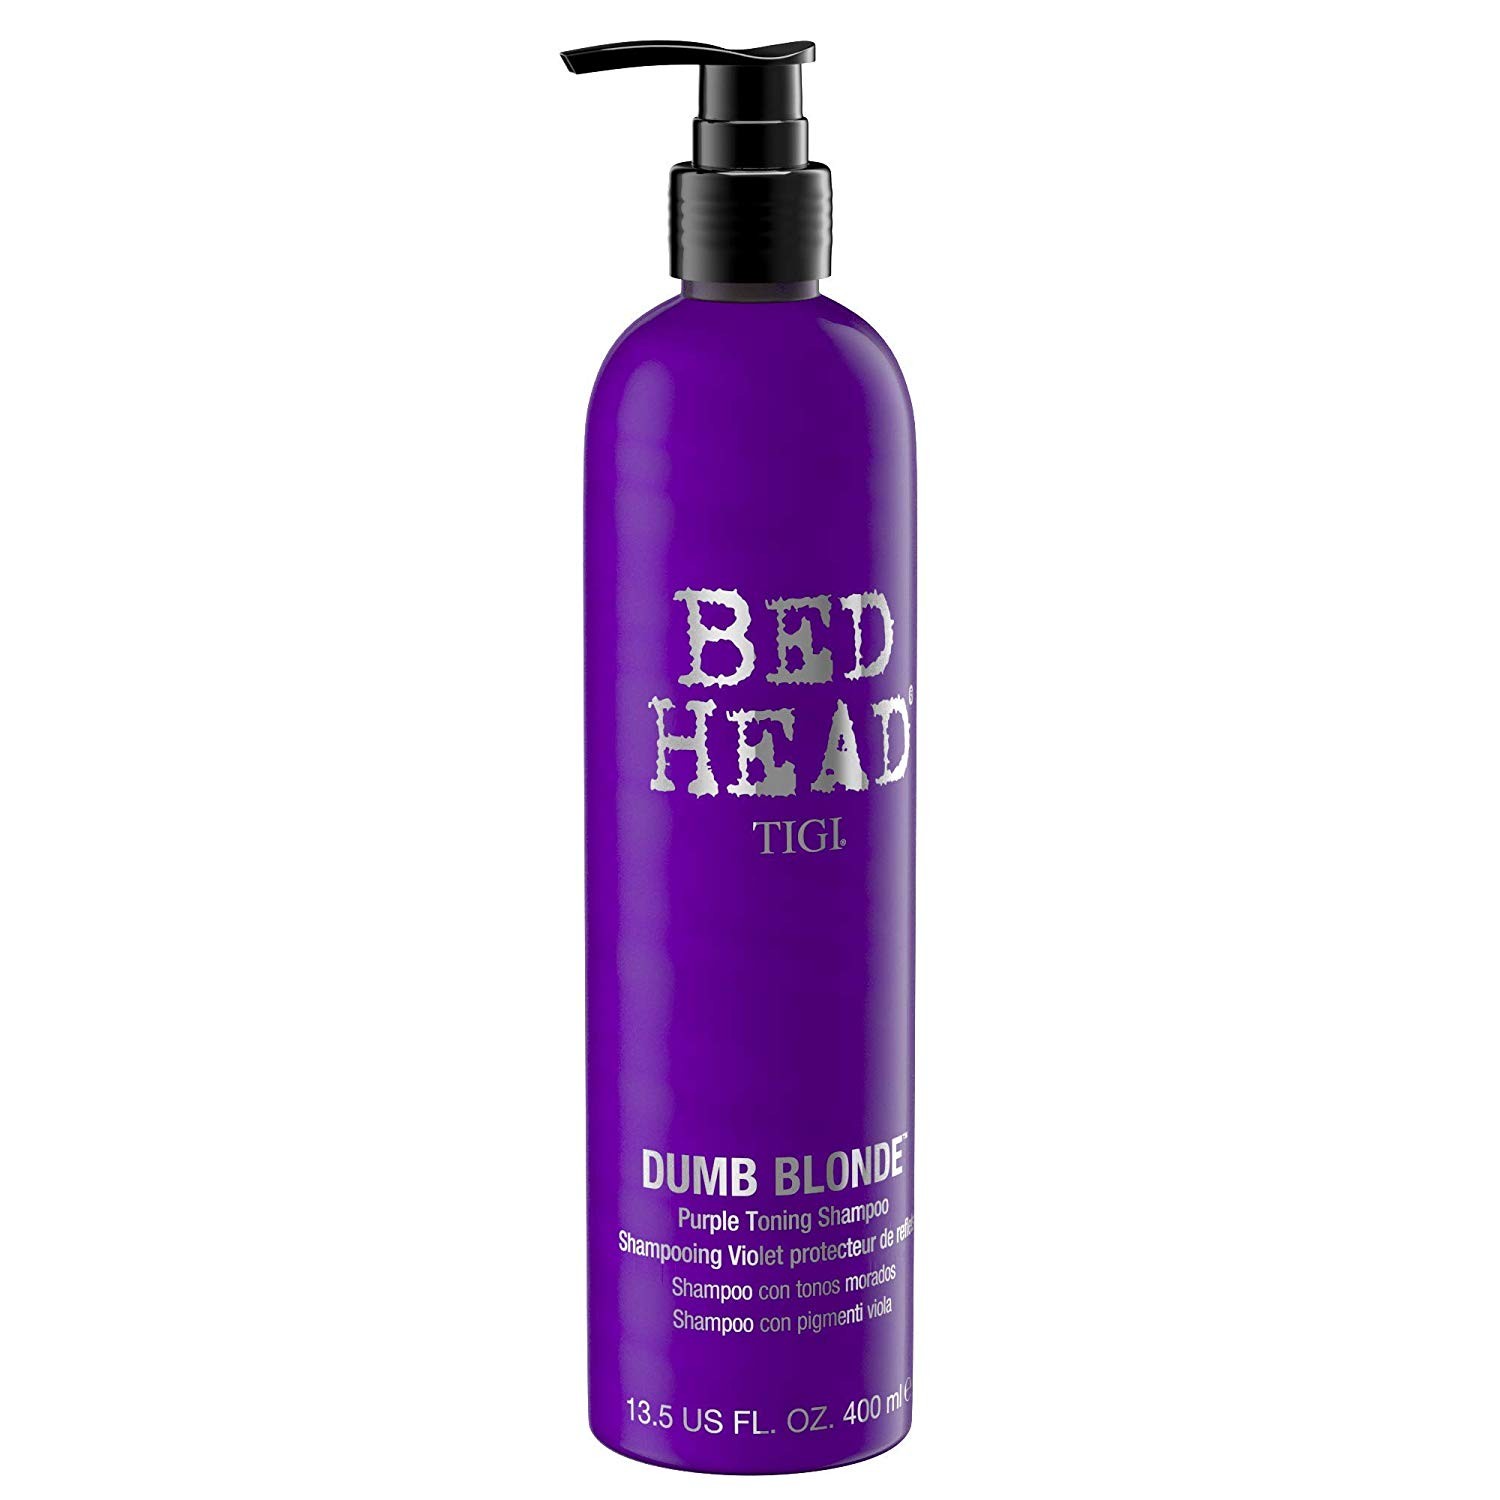 Dumb Blonde - Shampoo, TIGI Bed Head, R$ 90,90 (Foto: Divulgação)